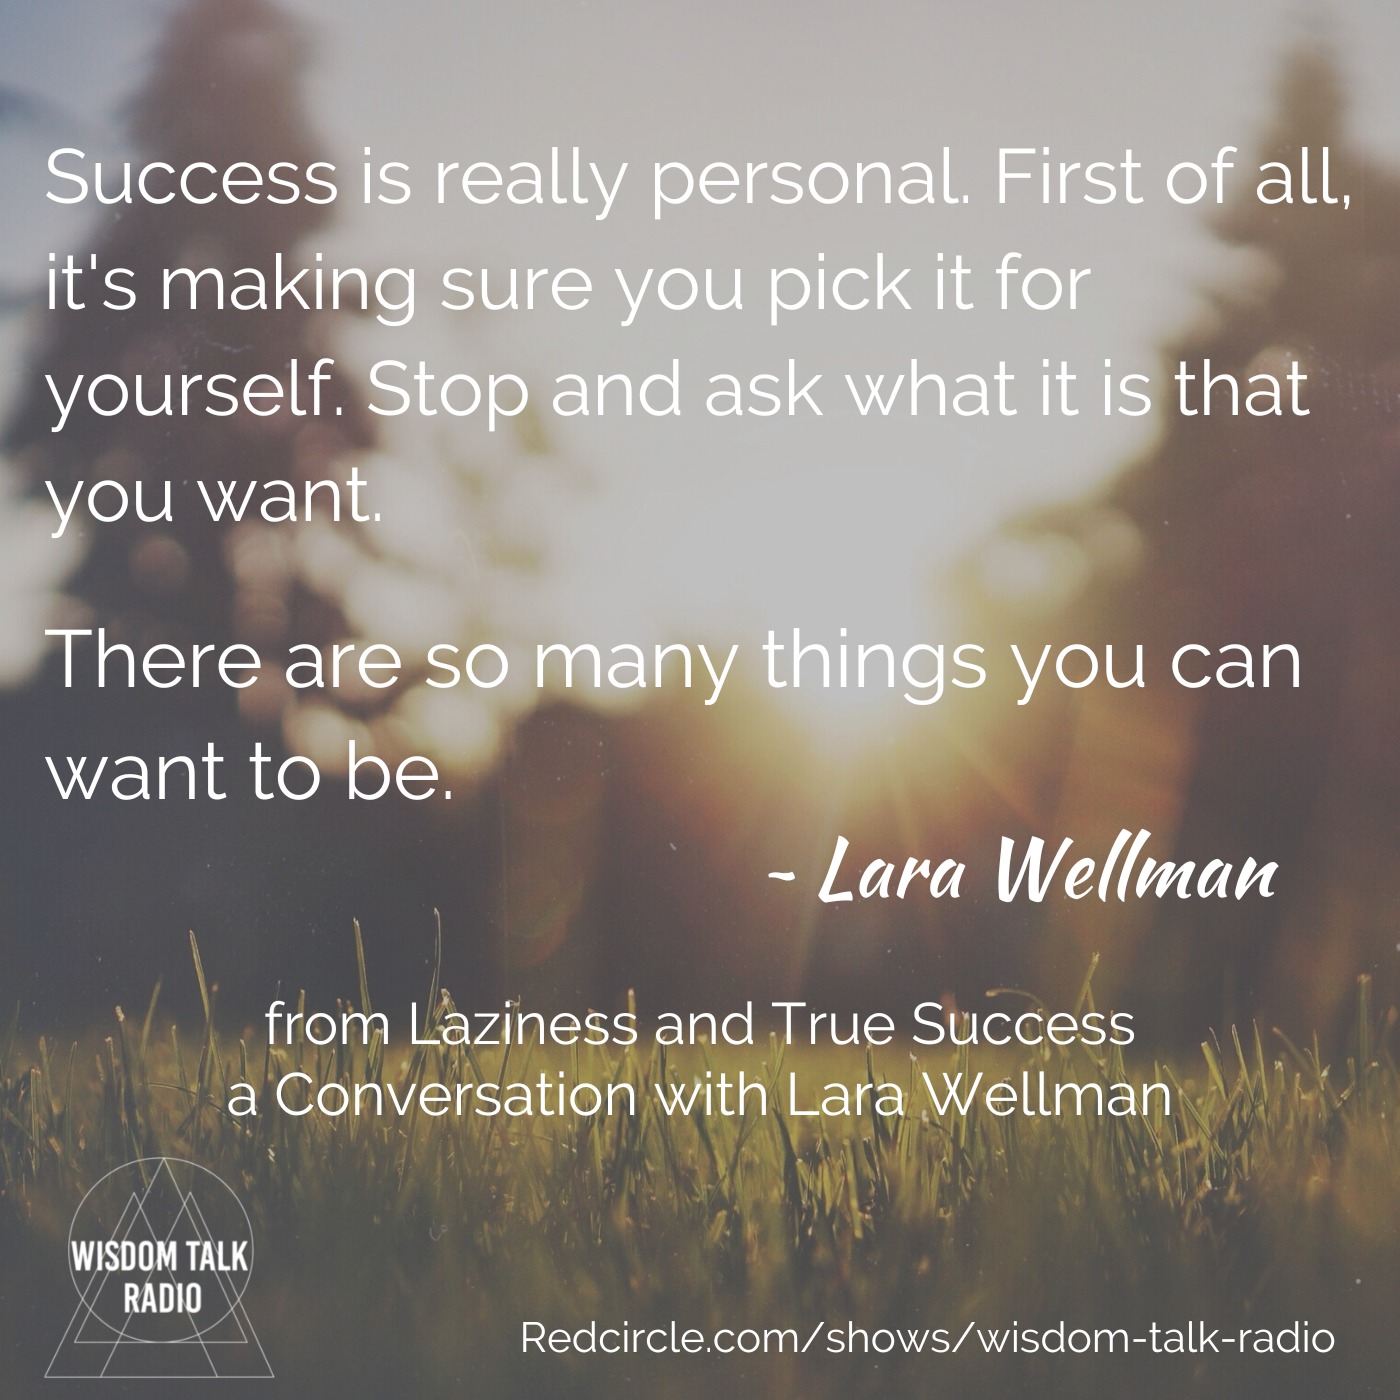 Laziness and True Success: a Conversation with Lara Wellman